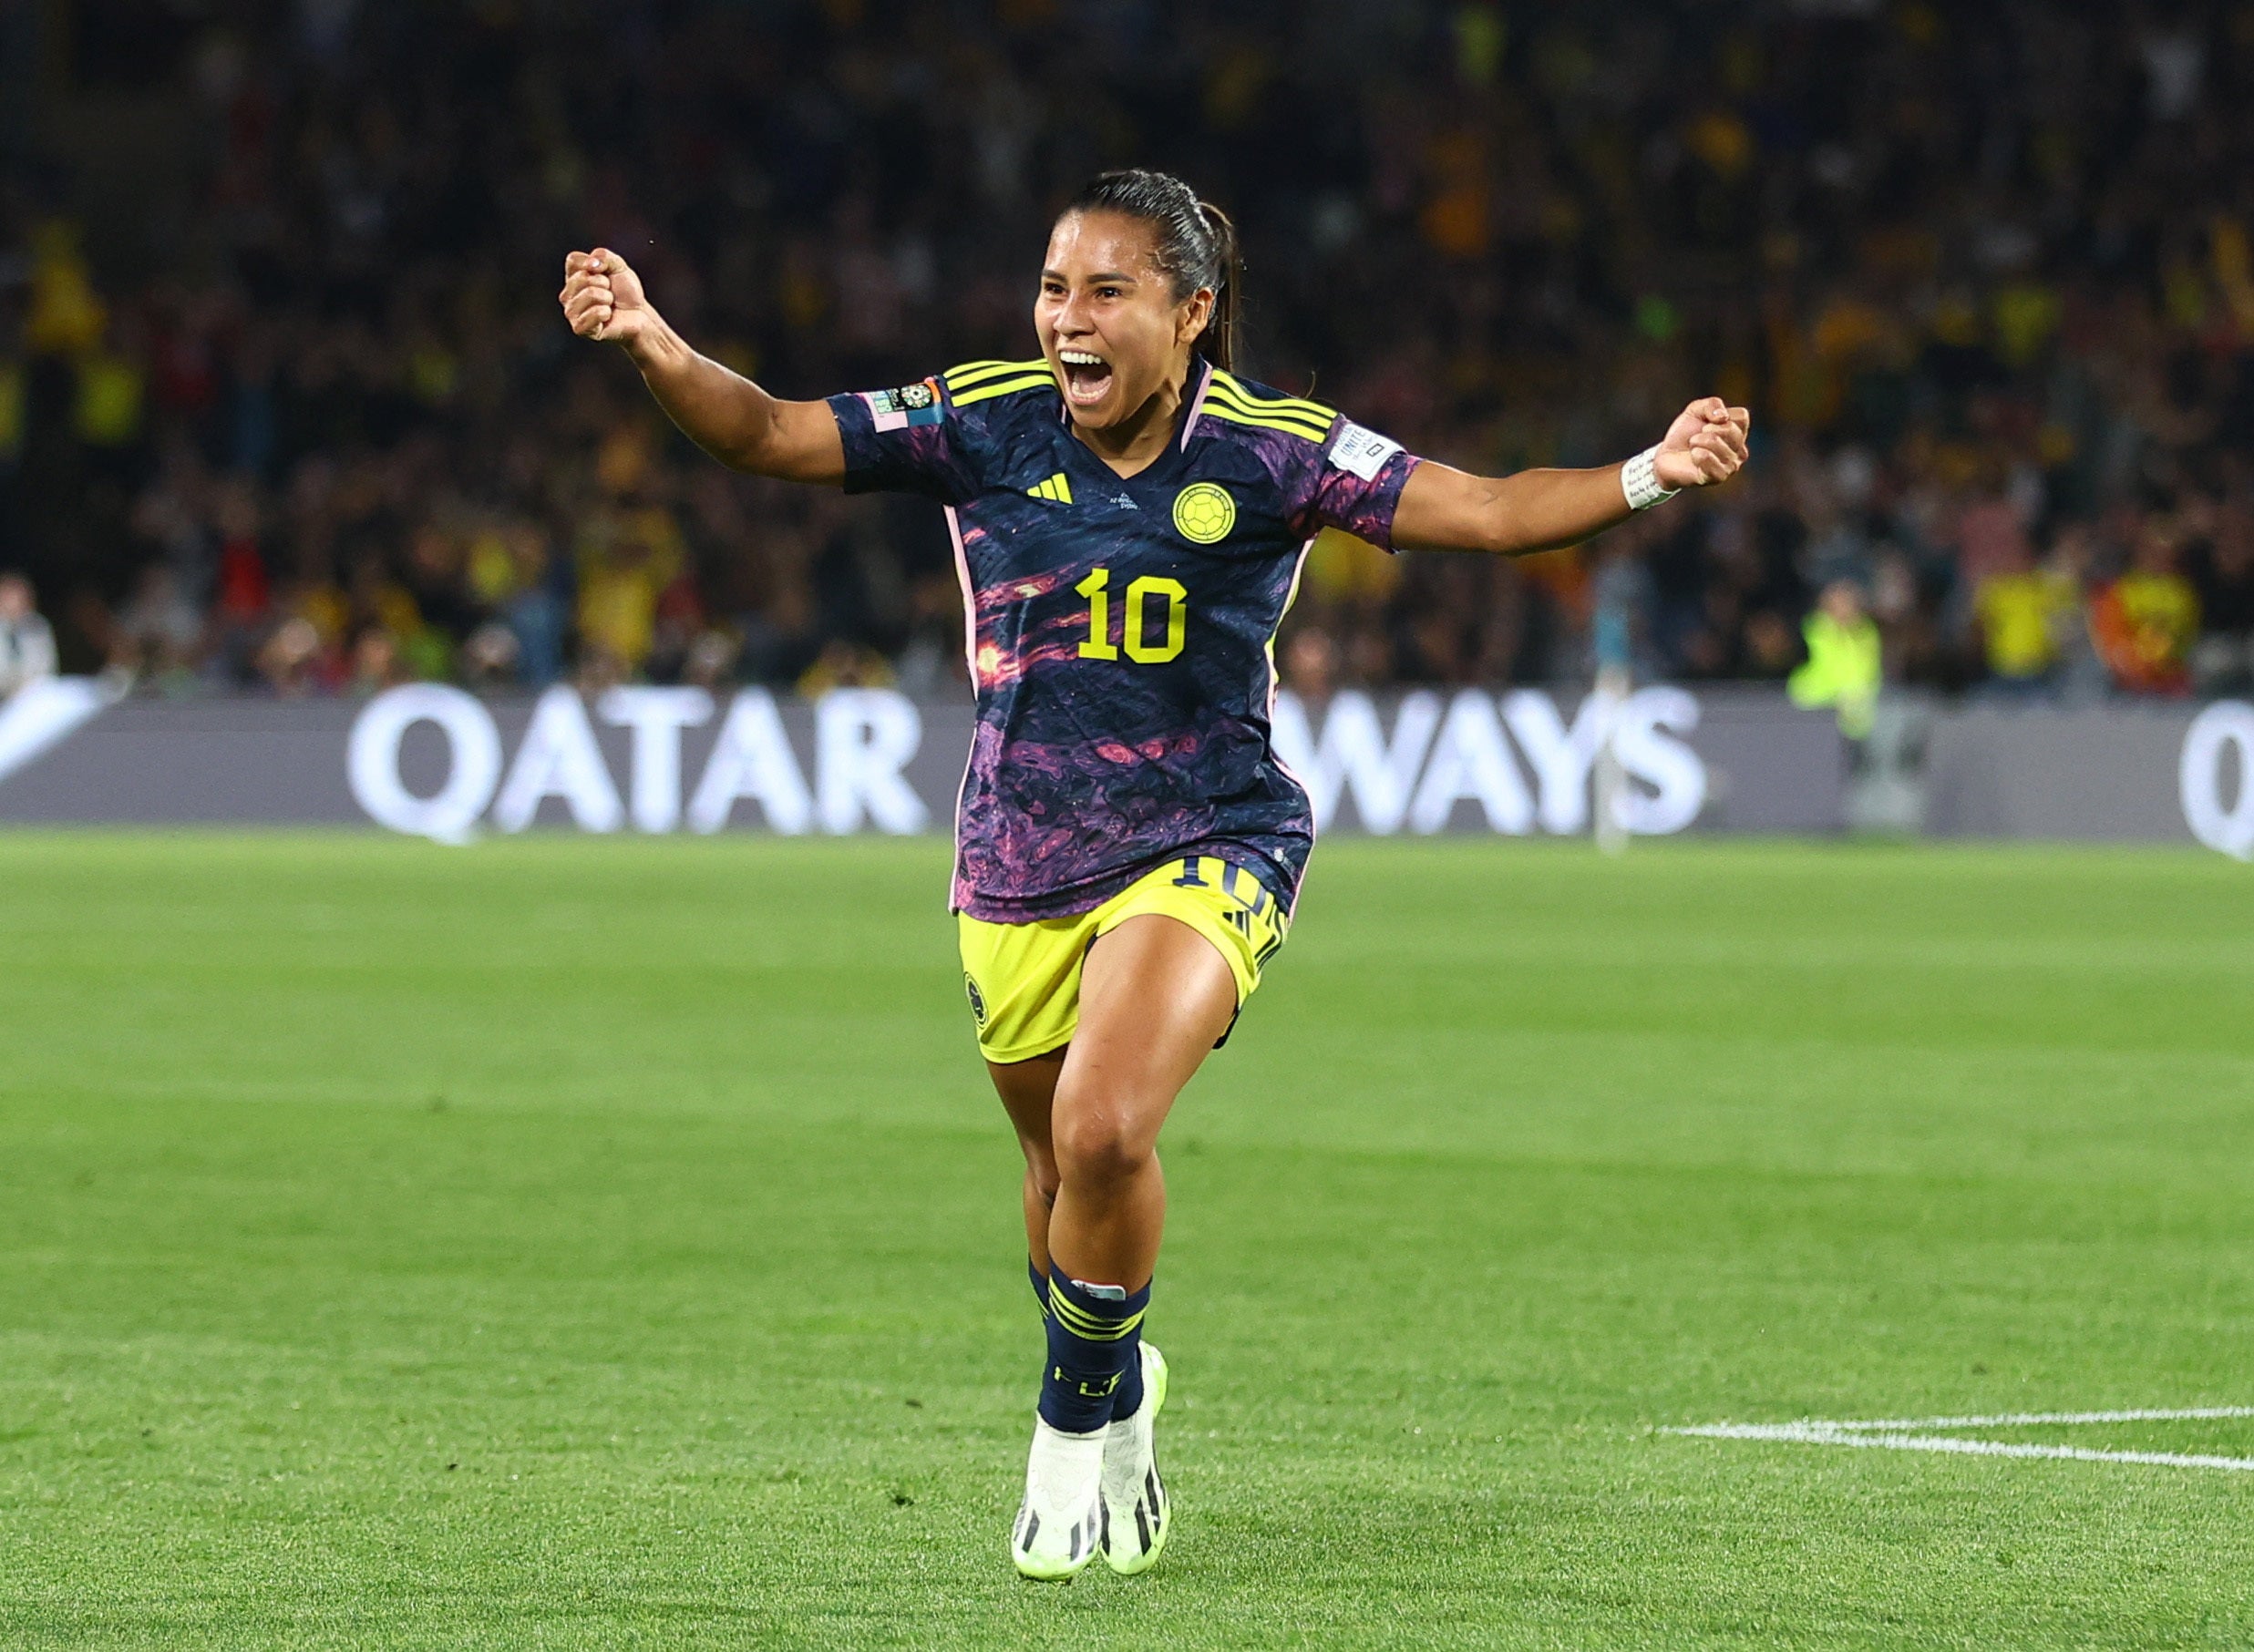 Colombia’s Leicy Santos celebrates scoring on 44 minutes